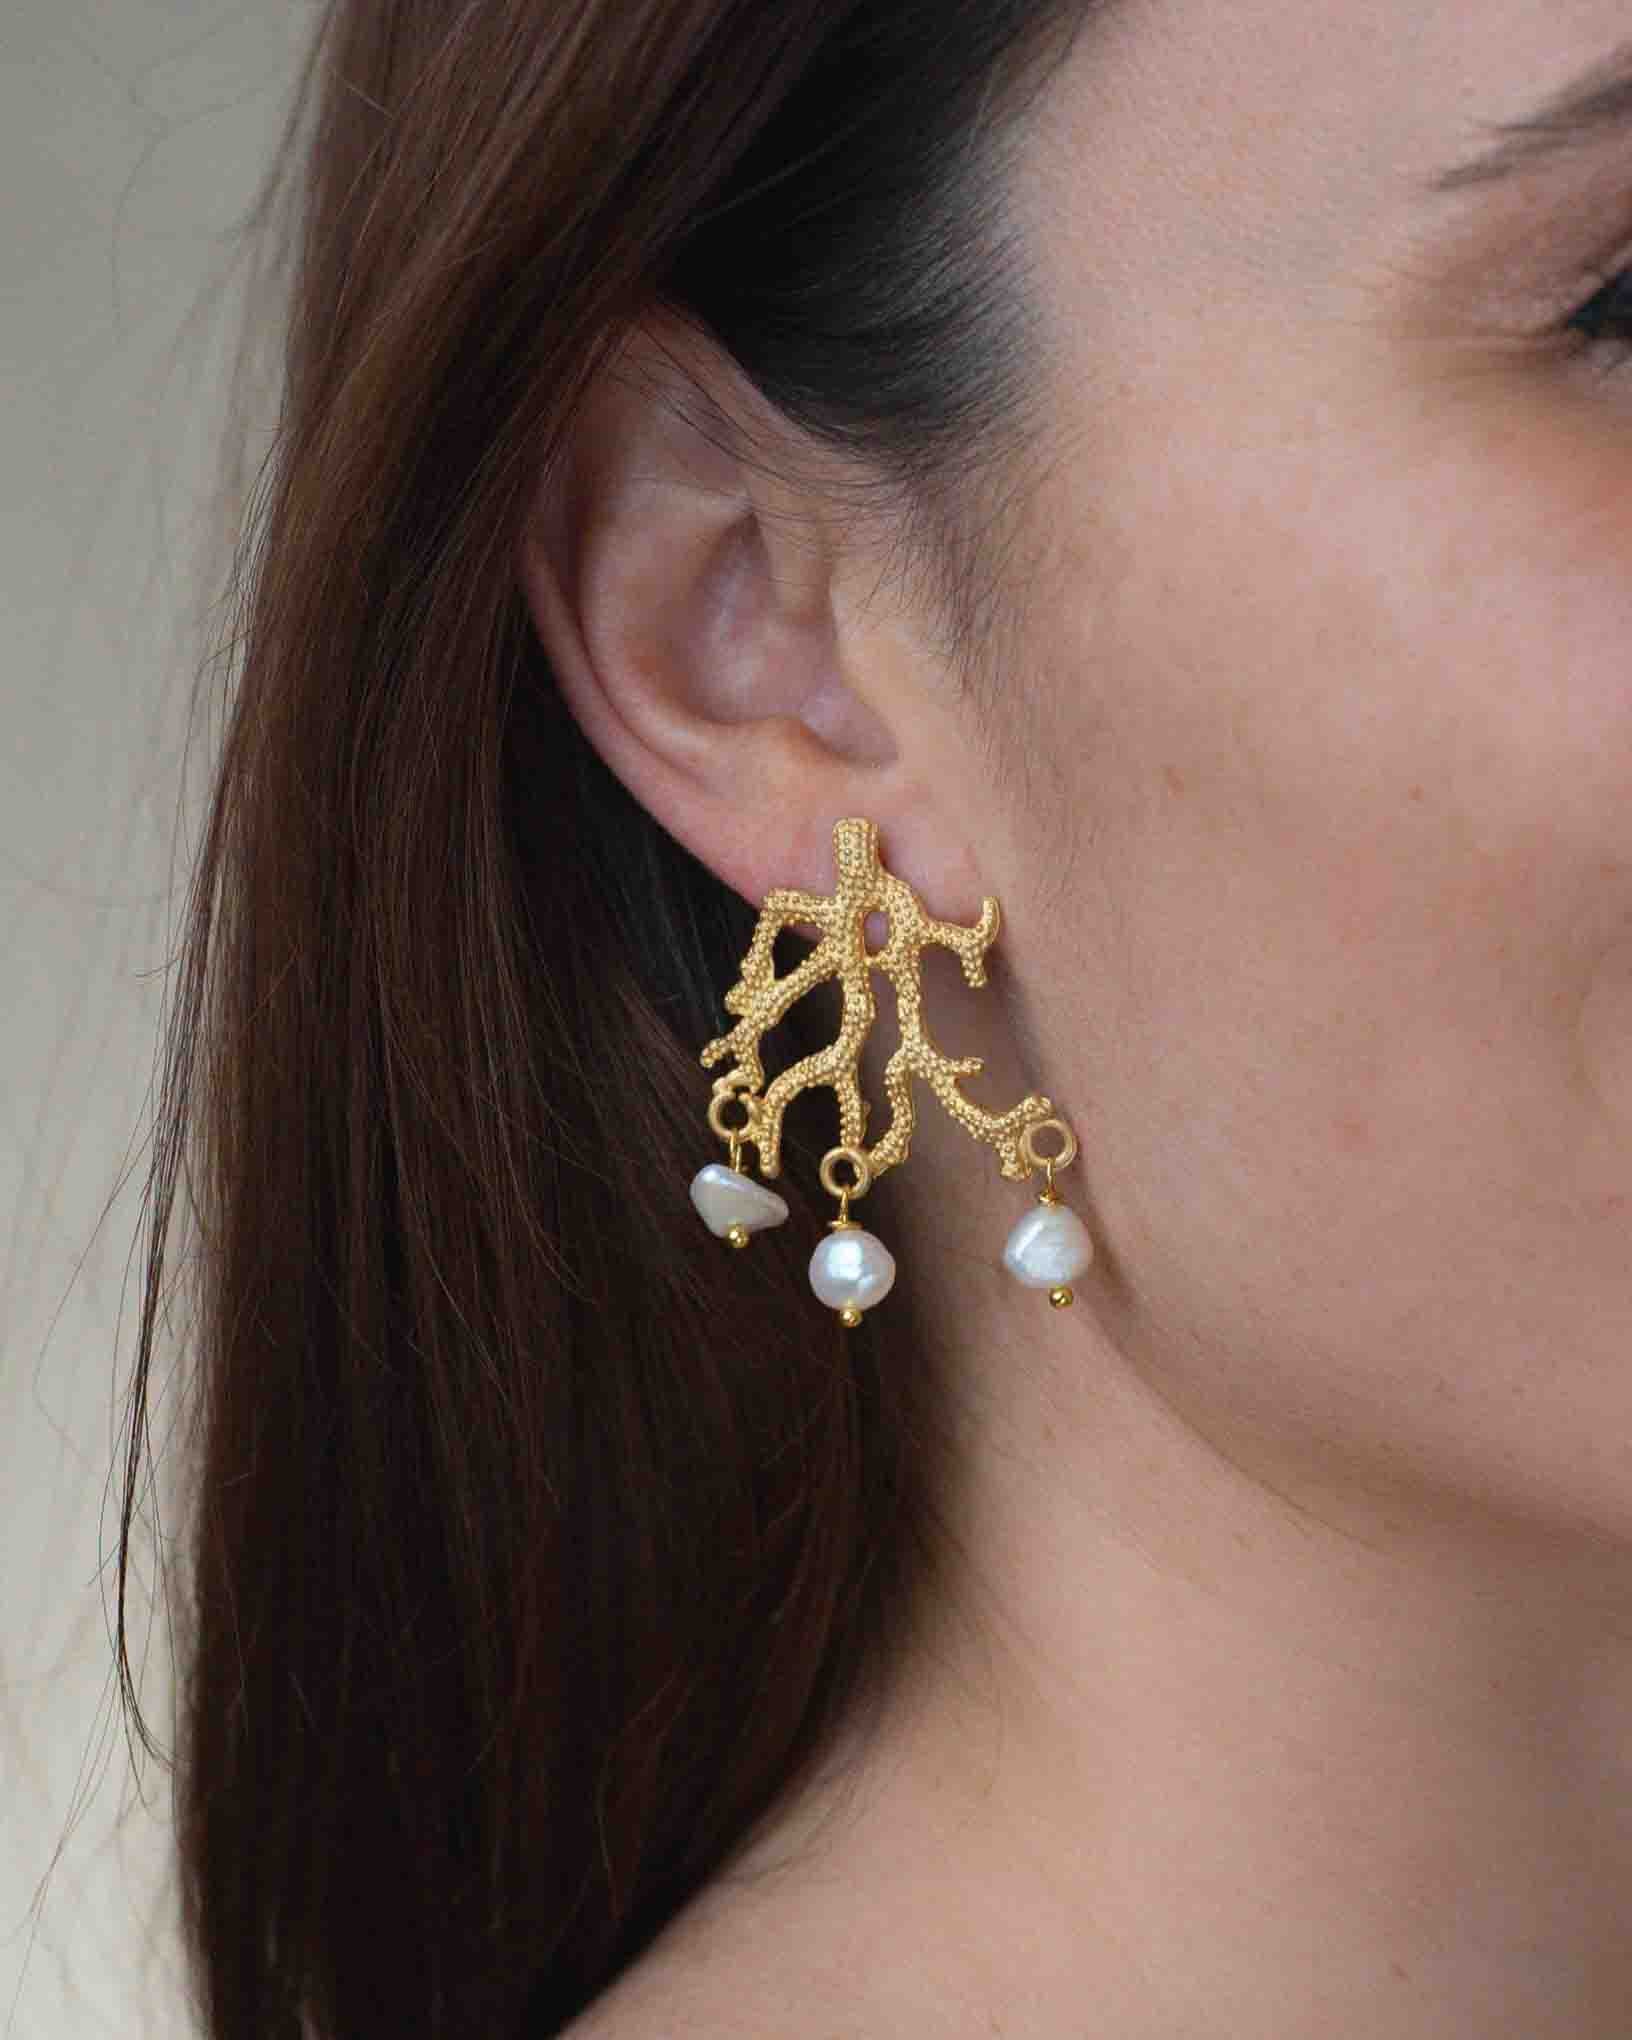 Ohrring Corallo Bianco aus der Kollektion Perle e Coralli von Donna Rachele Jewelry